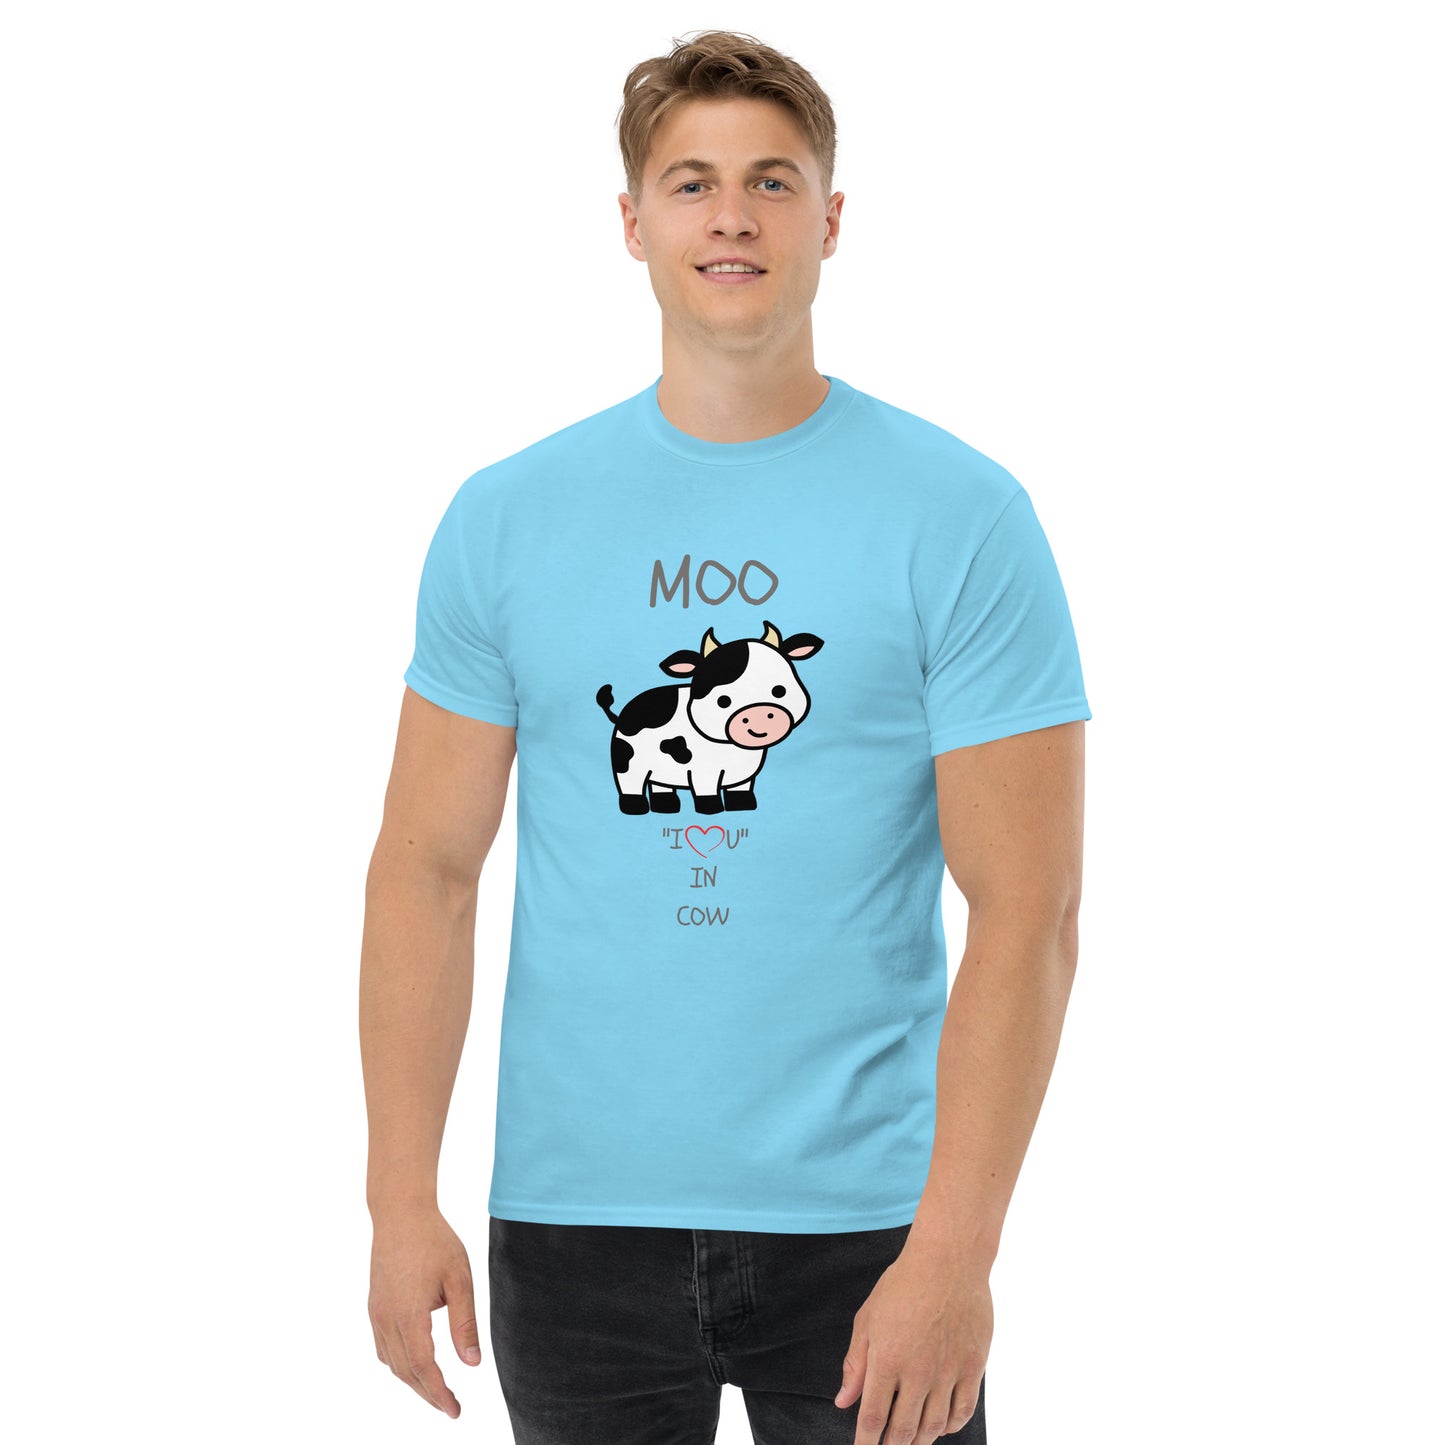 MOO "I LOVE U" IN COW Men's classic tee